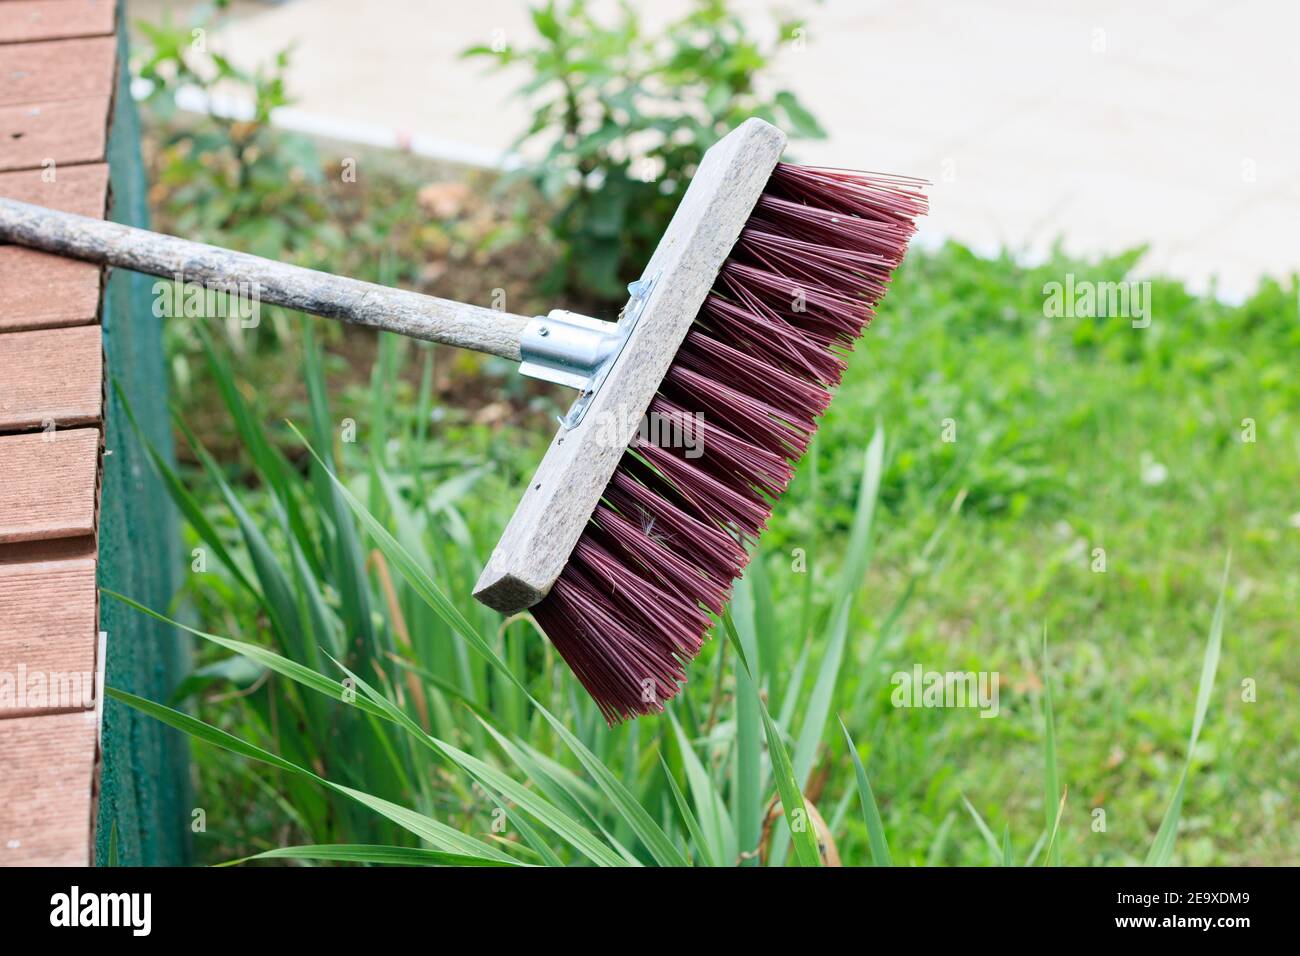 Closeup shot of a garden broom with a wooden handle Stock Photo